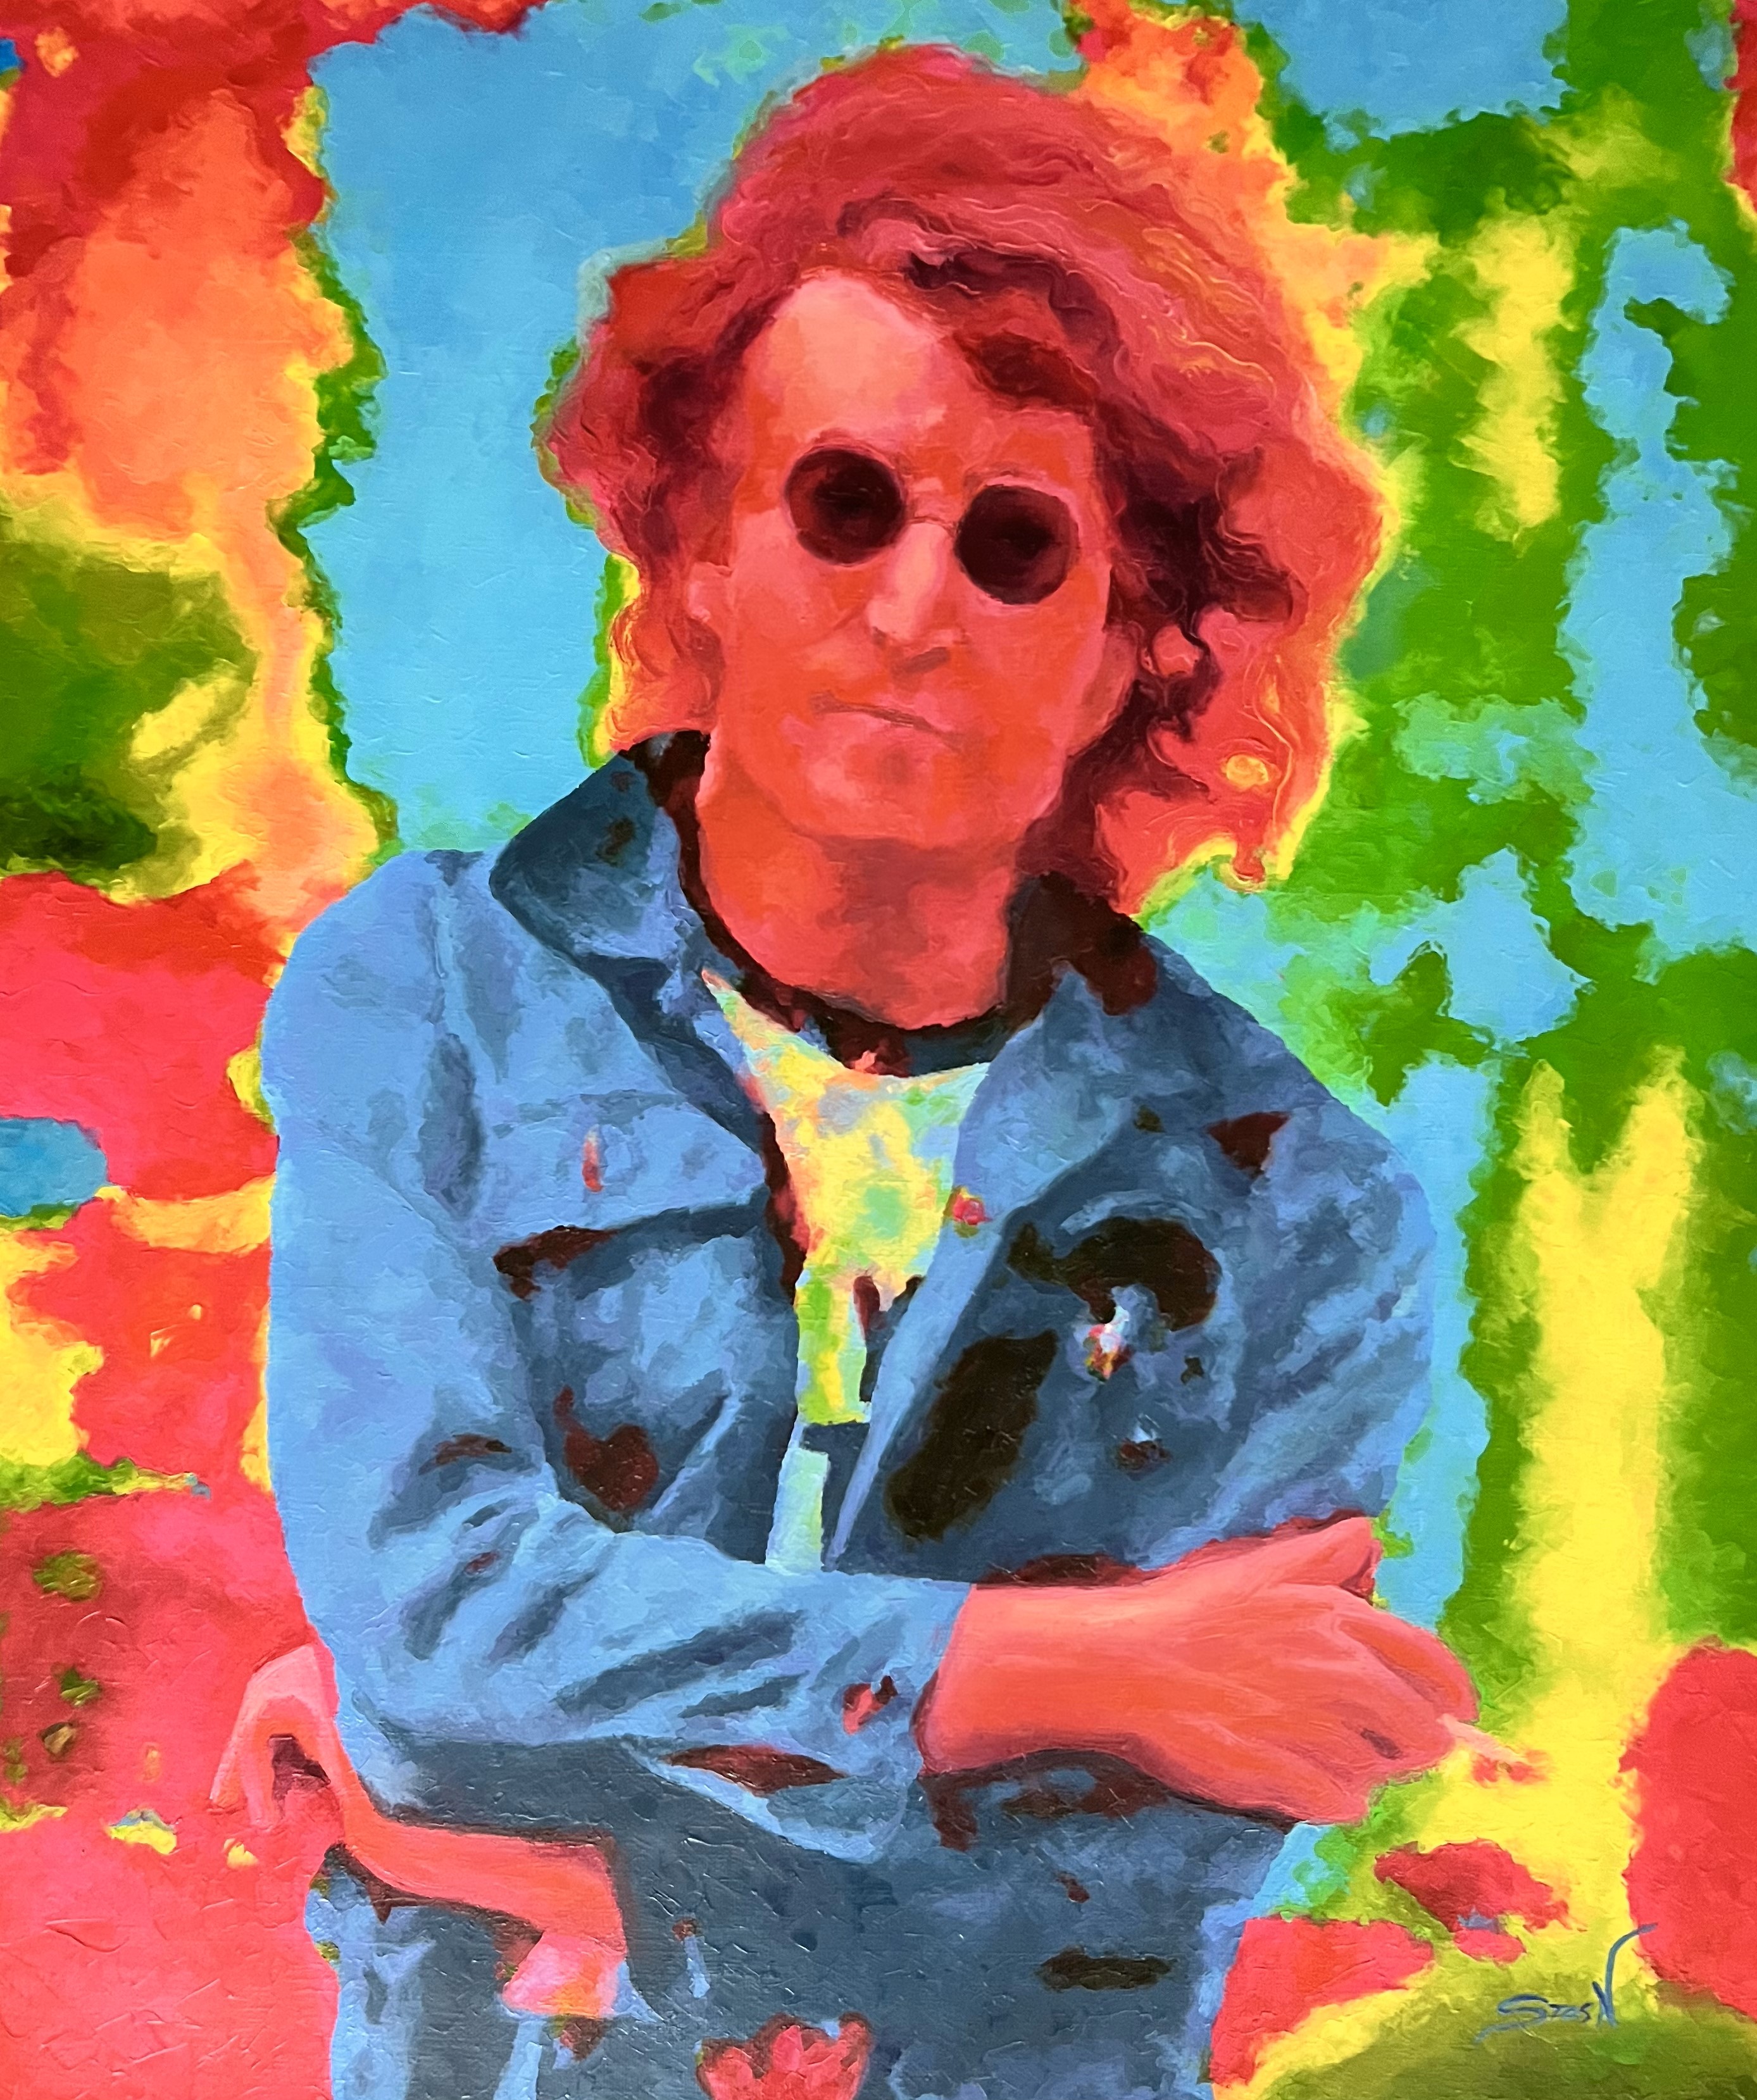 STAS NAMIN - John Lennon - Oil on Canvas - 30x25 inches